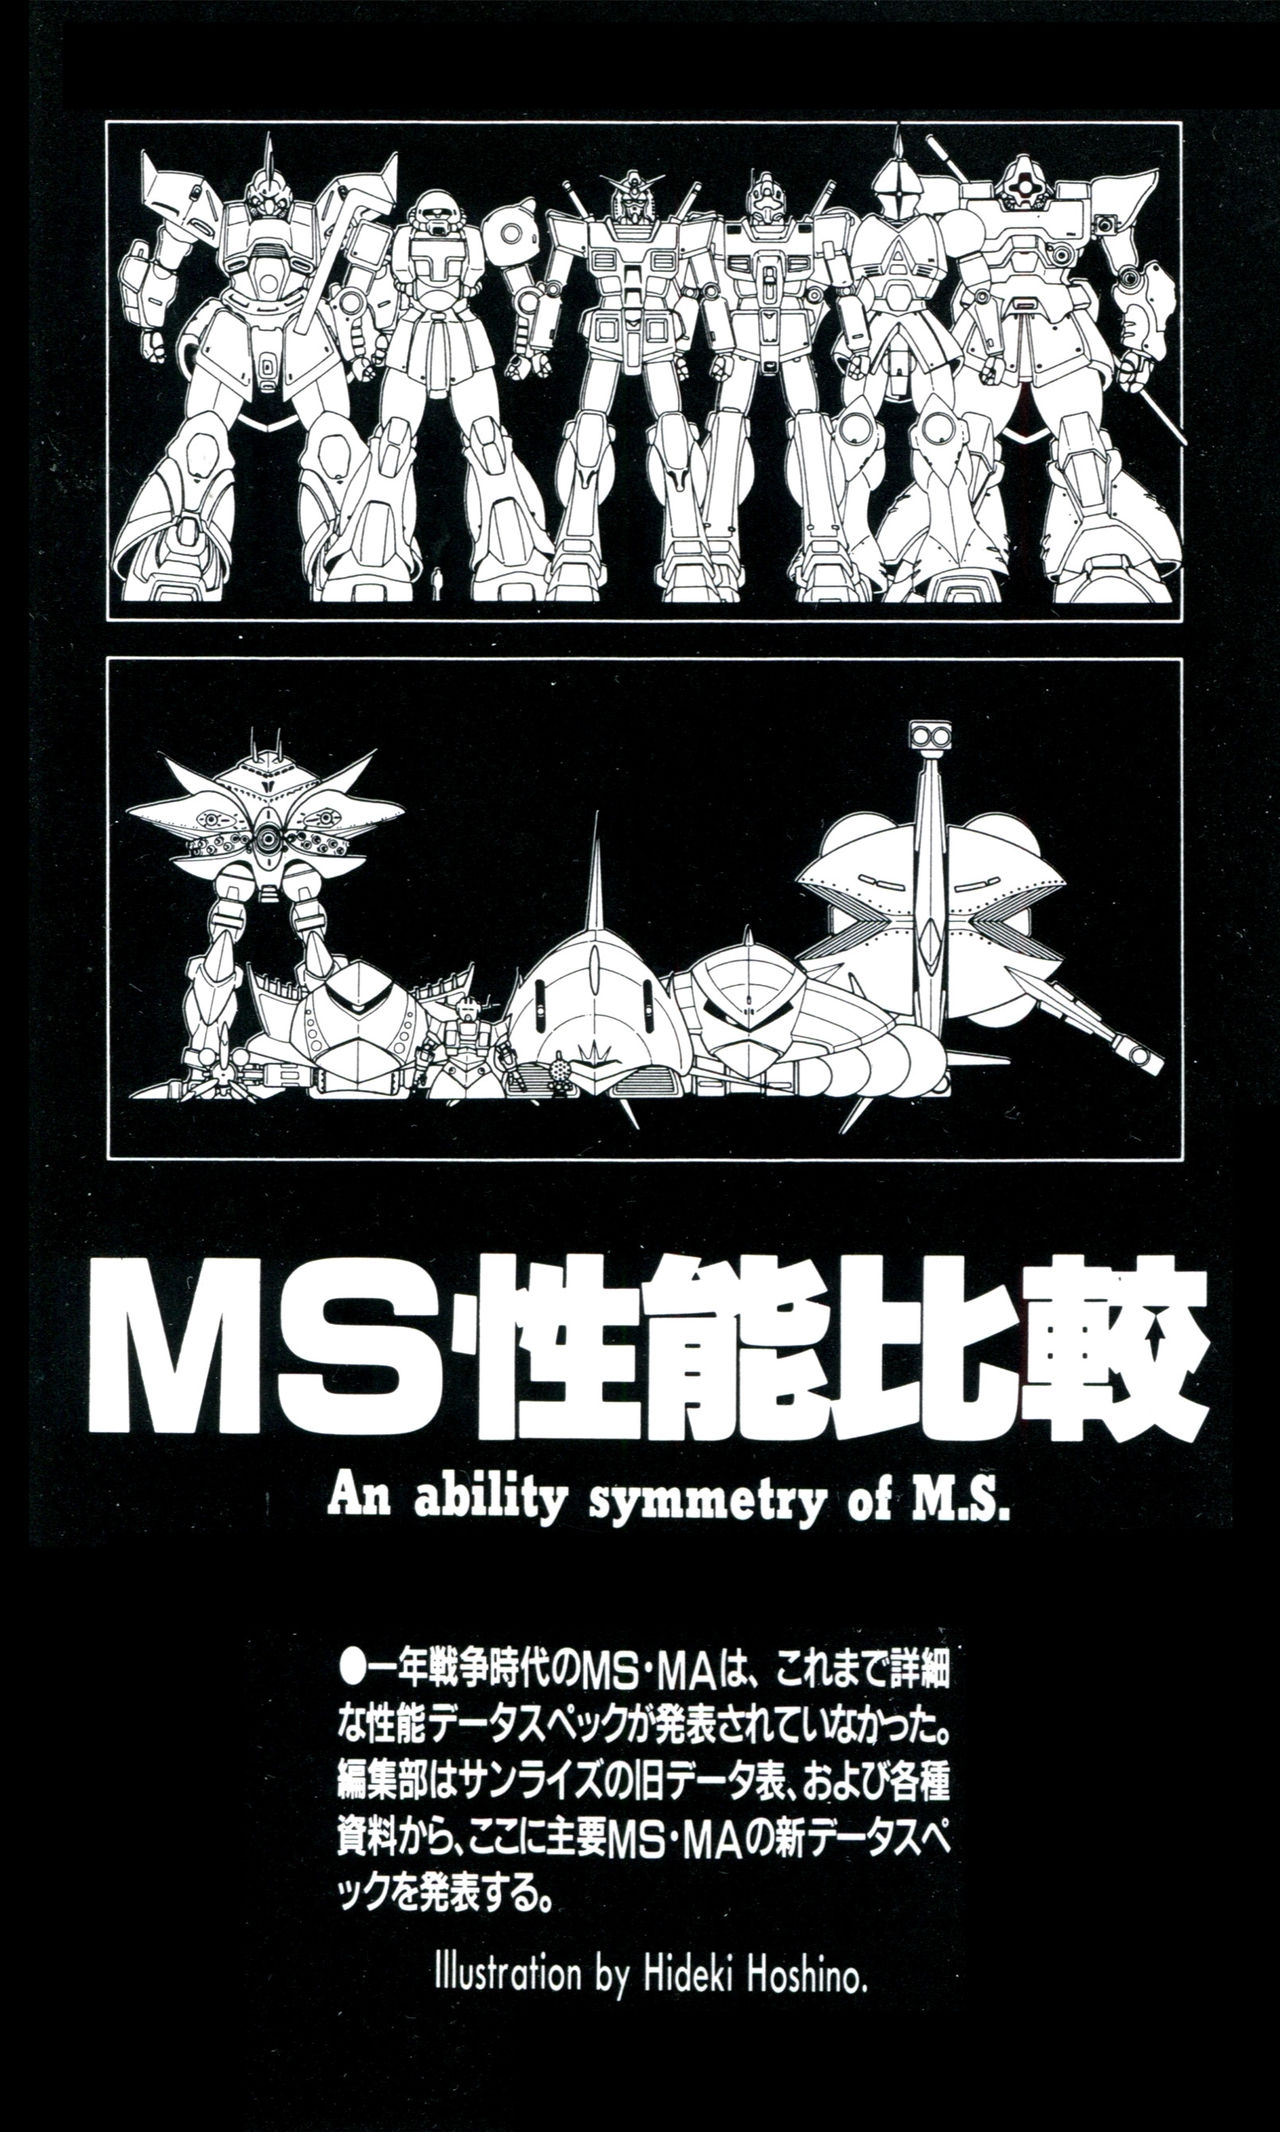 Mobile Suit Gundam U.C. Box MS Gundam Encyclopedia NO.01 - Mobile Suit Gundam 50